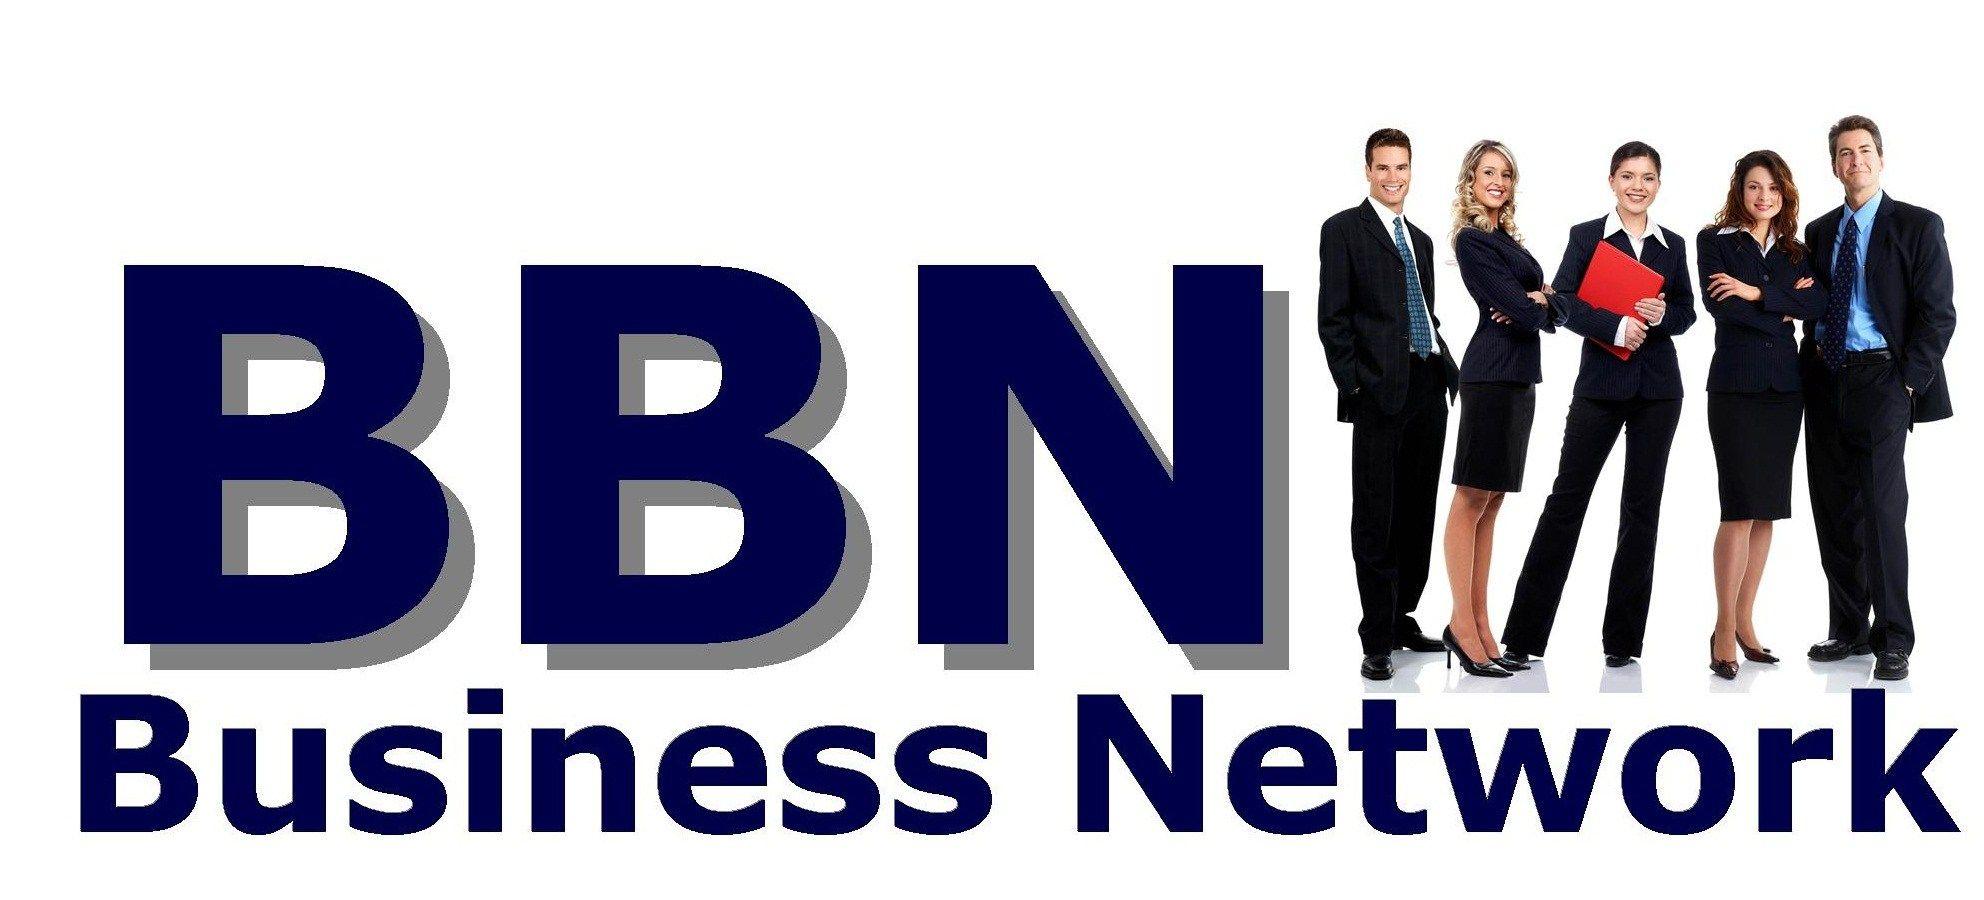 BBN Logo - Cindy Pivacic - New BBN logo